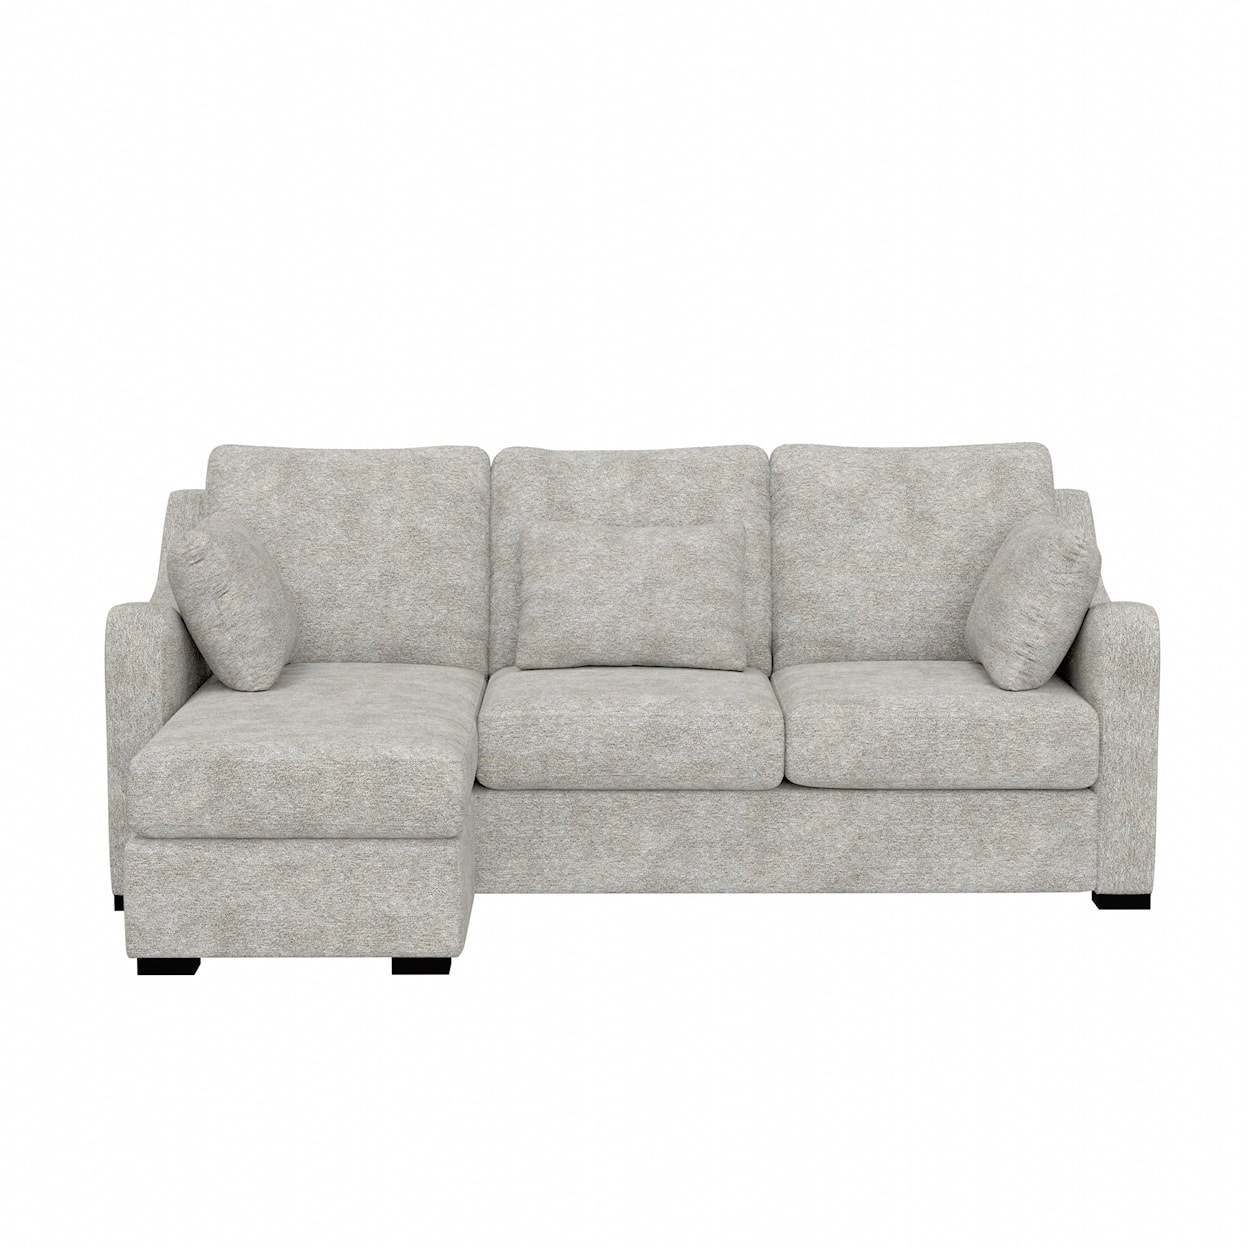 Hillsdale York Sofa